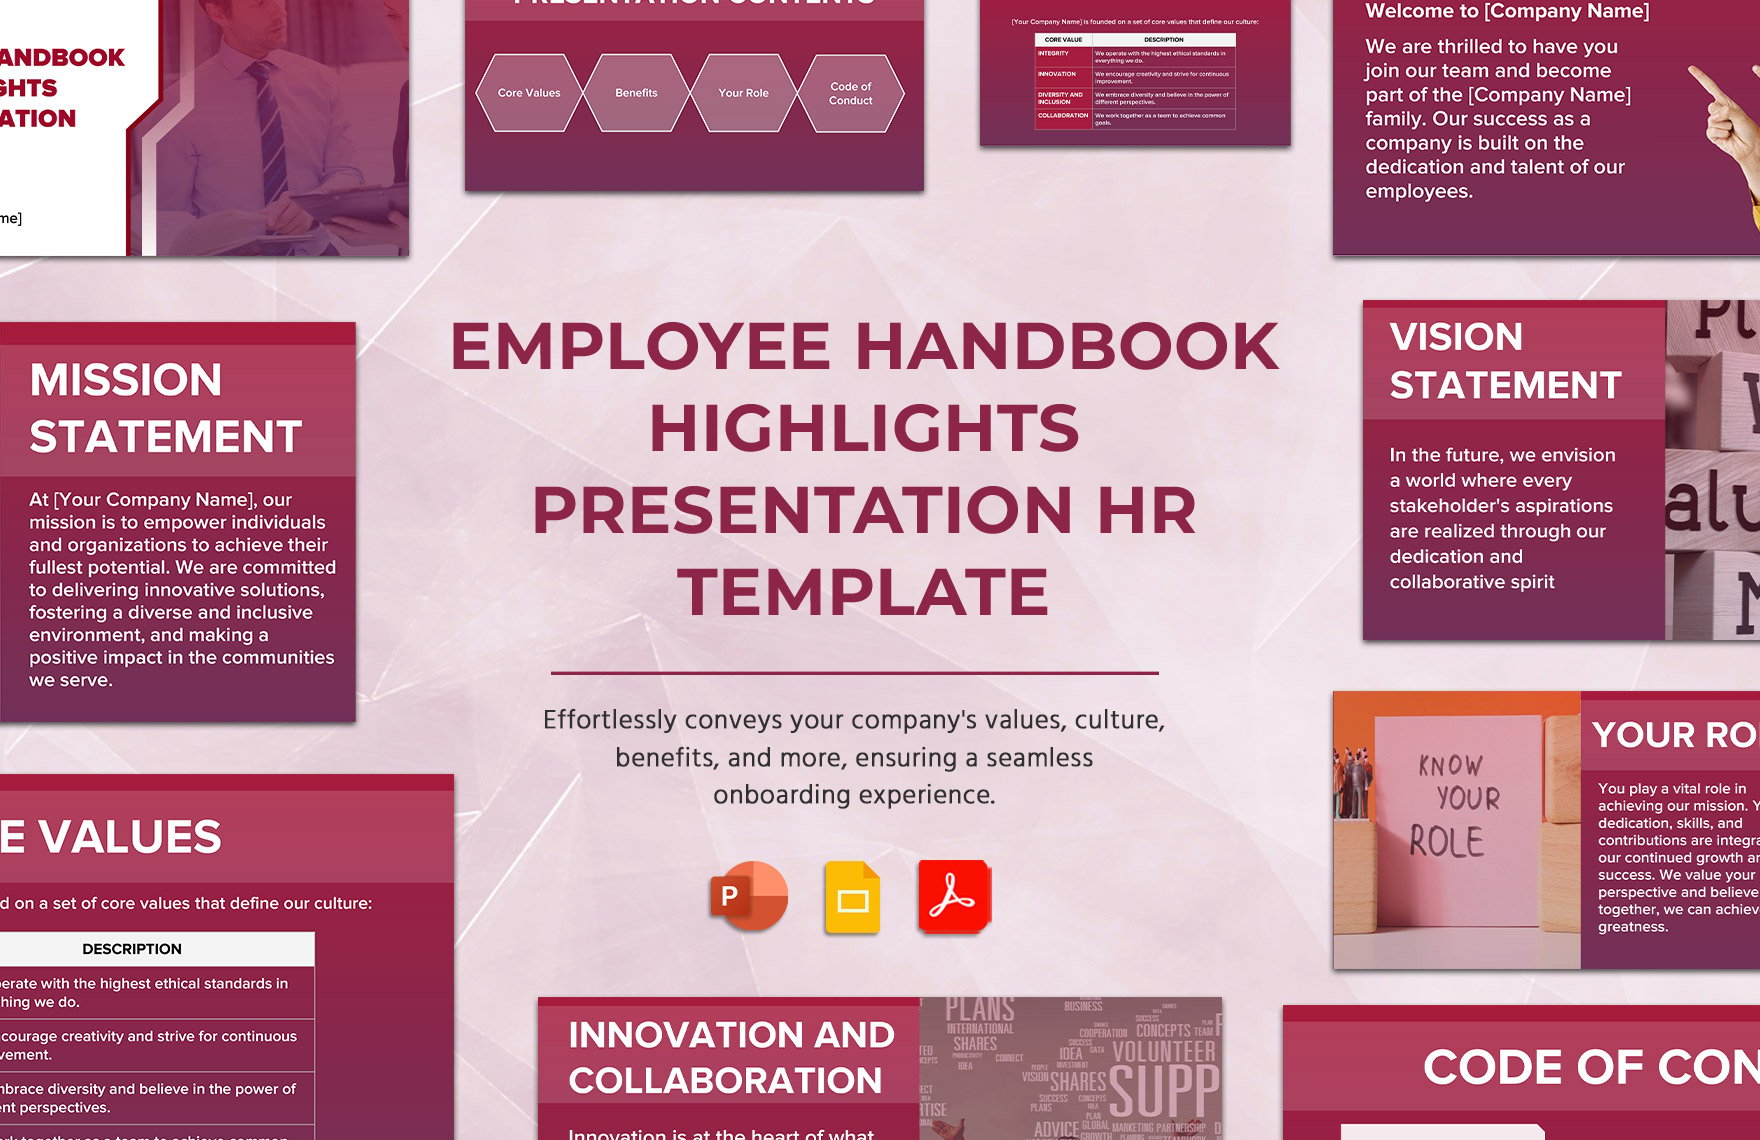 Employee Handbook Highlights Presentation HR Template